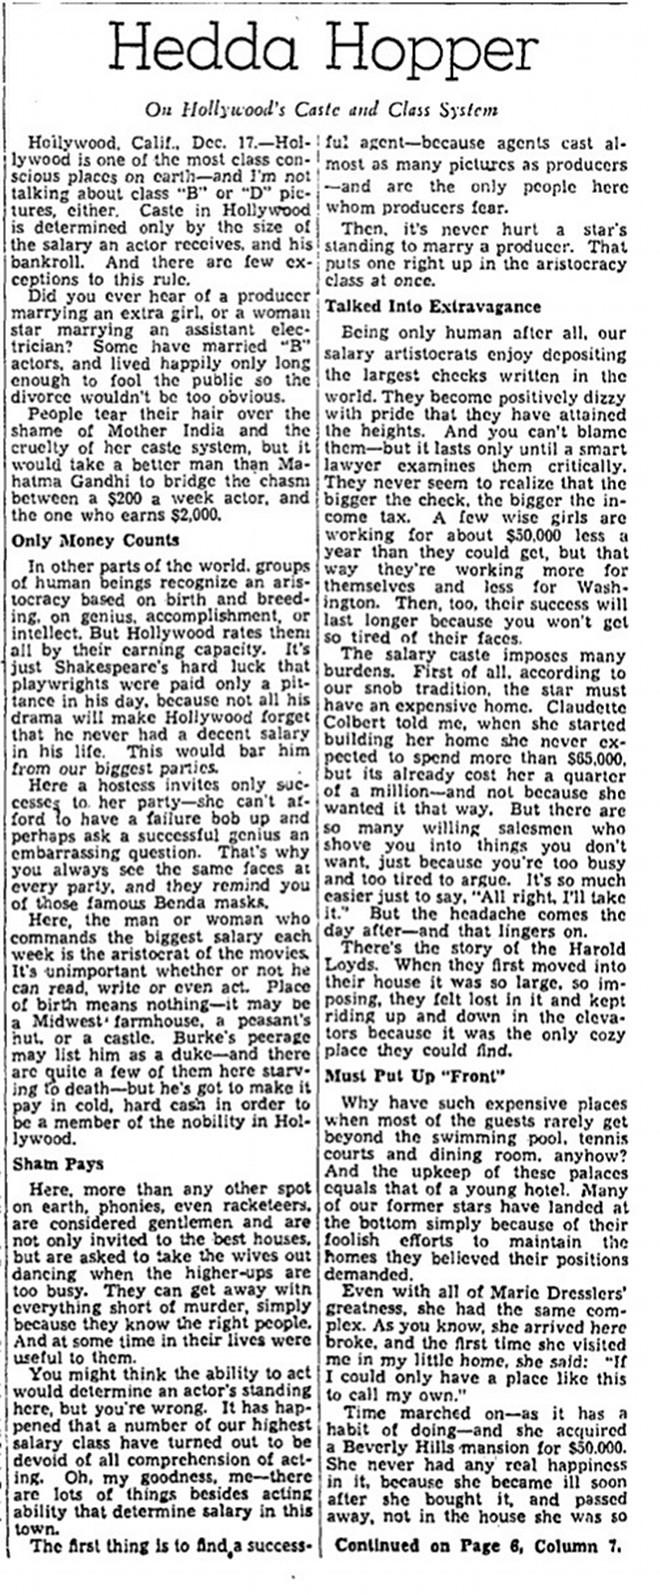 7 Media Fields Journal Figure 3. Hedda Hopper weighs in on Hollywood s caste problem. Source: The Washington Post, December 18, 1938.